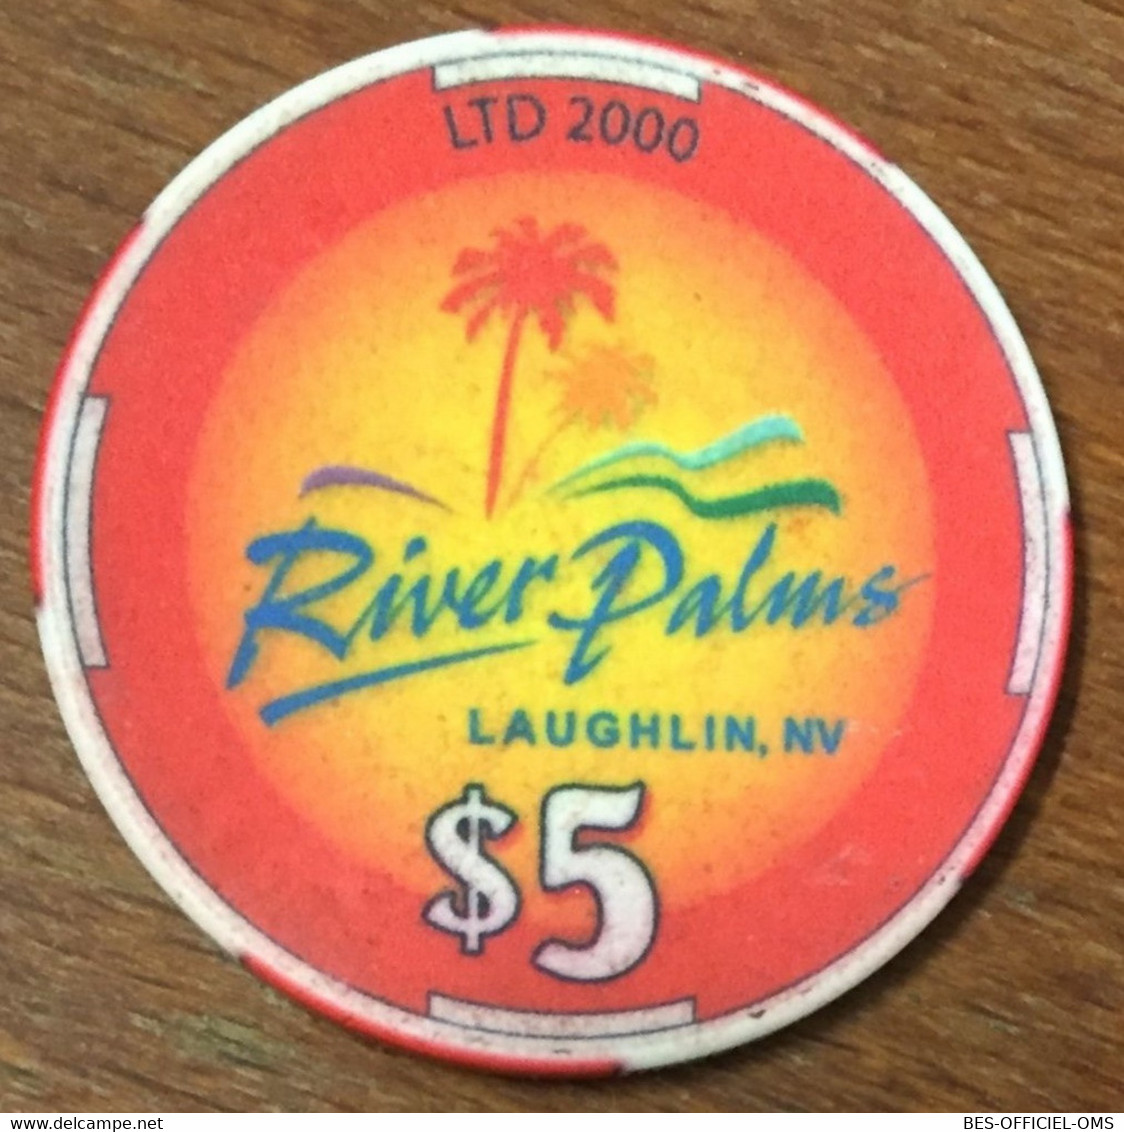 USA NEVADA LAUGHLIN RIVERS PAKM CASINO CHIP $ 5 JETON TOKENS COINS GAMING - Casino